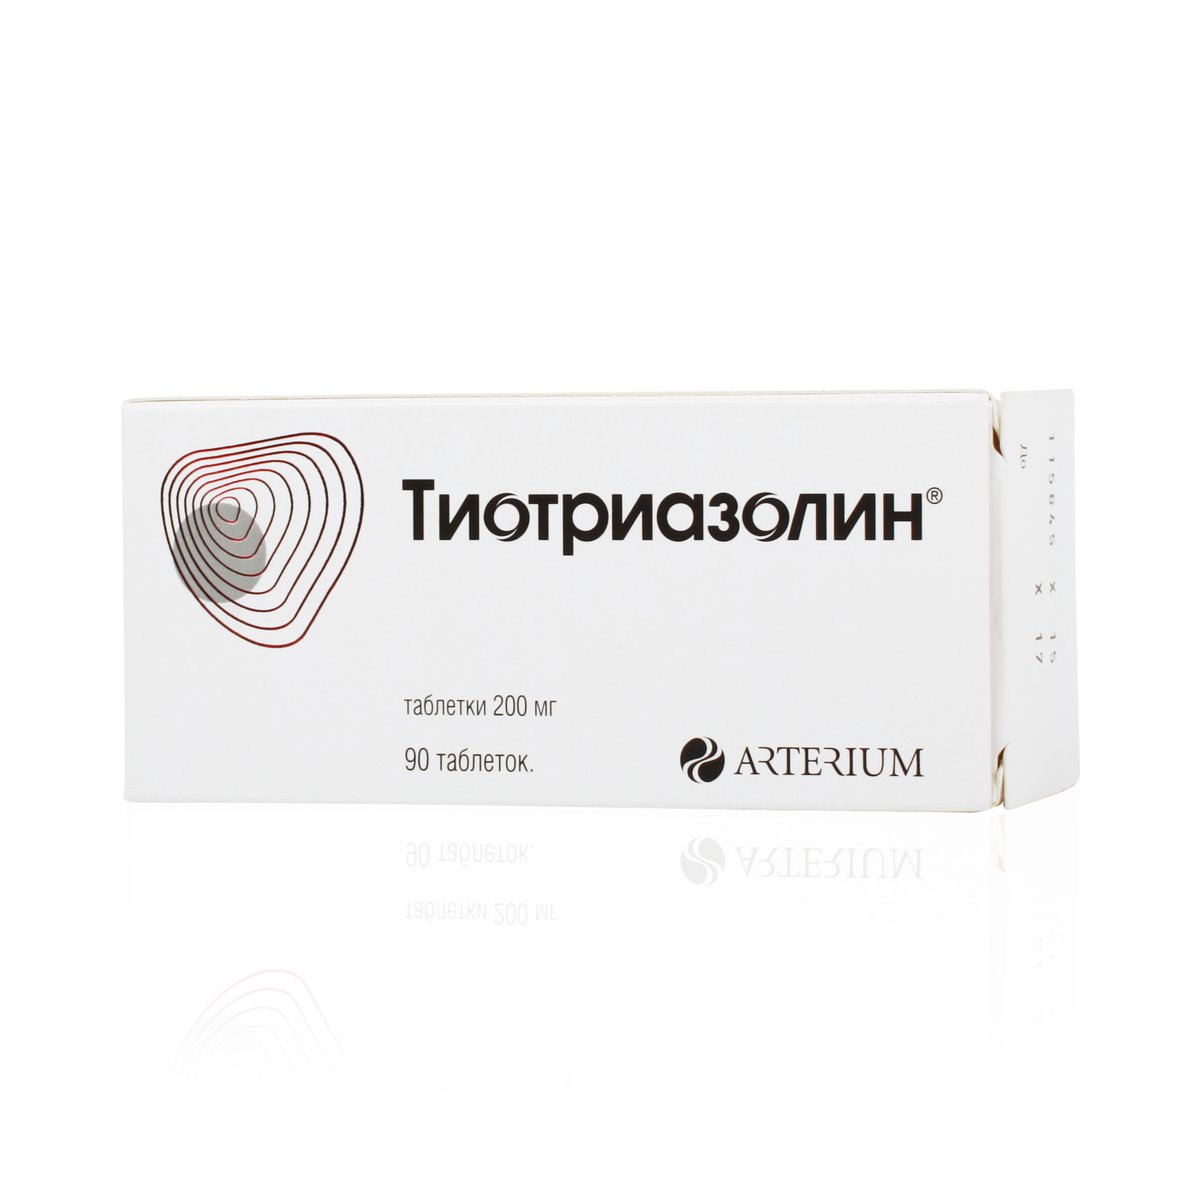 Тиотриазолин (таблетки, 90 шт, 200 мг) - цена,  онлайн  .